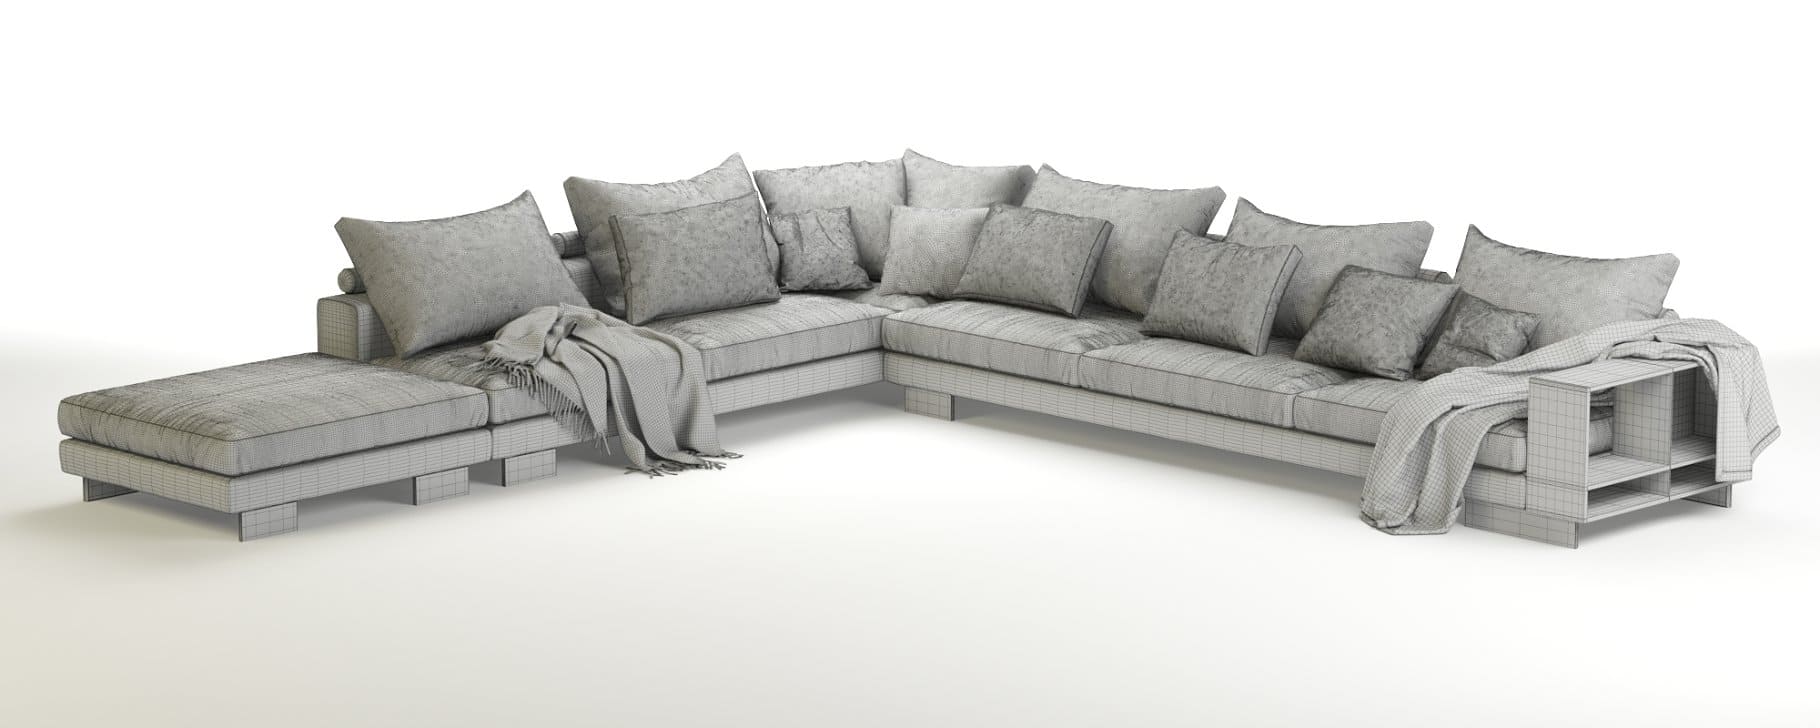 3D model of Flexform Lightpiece Modular Sofa.